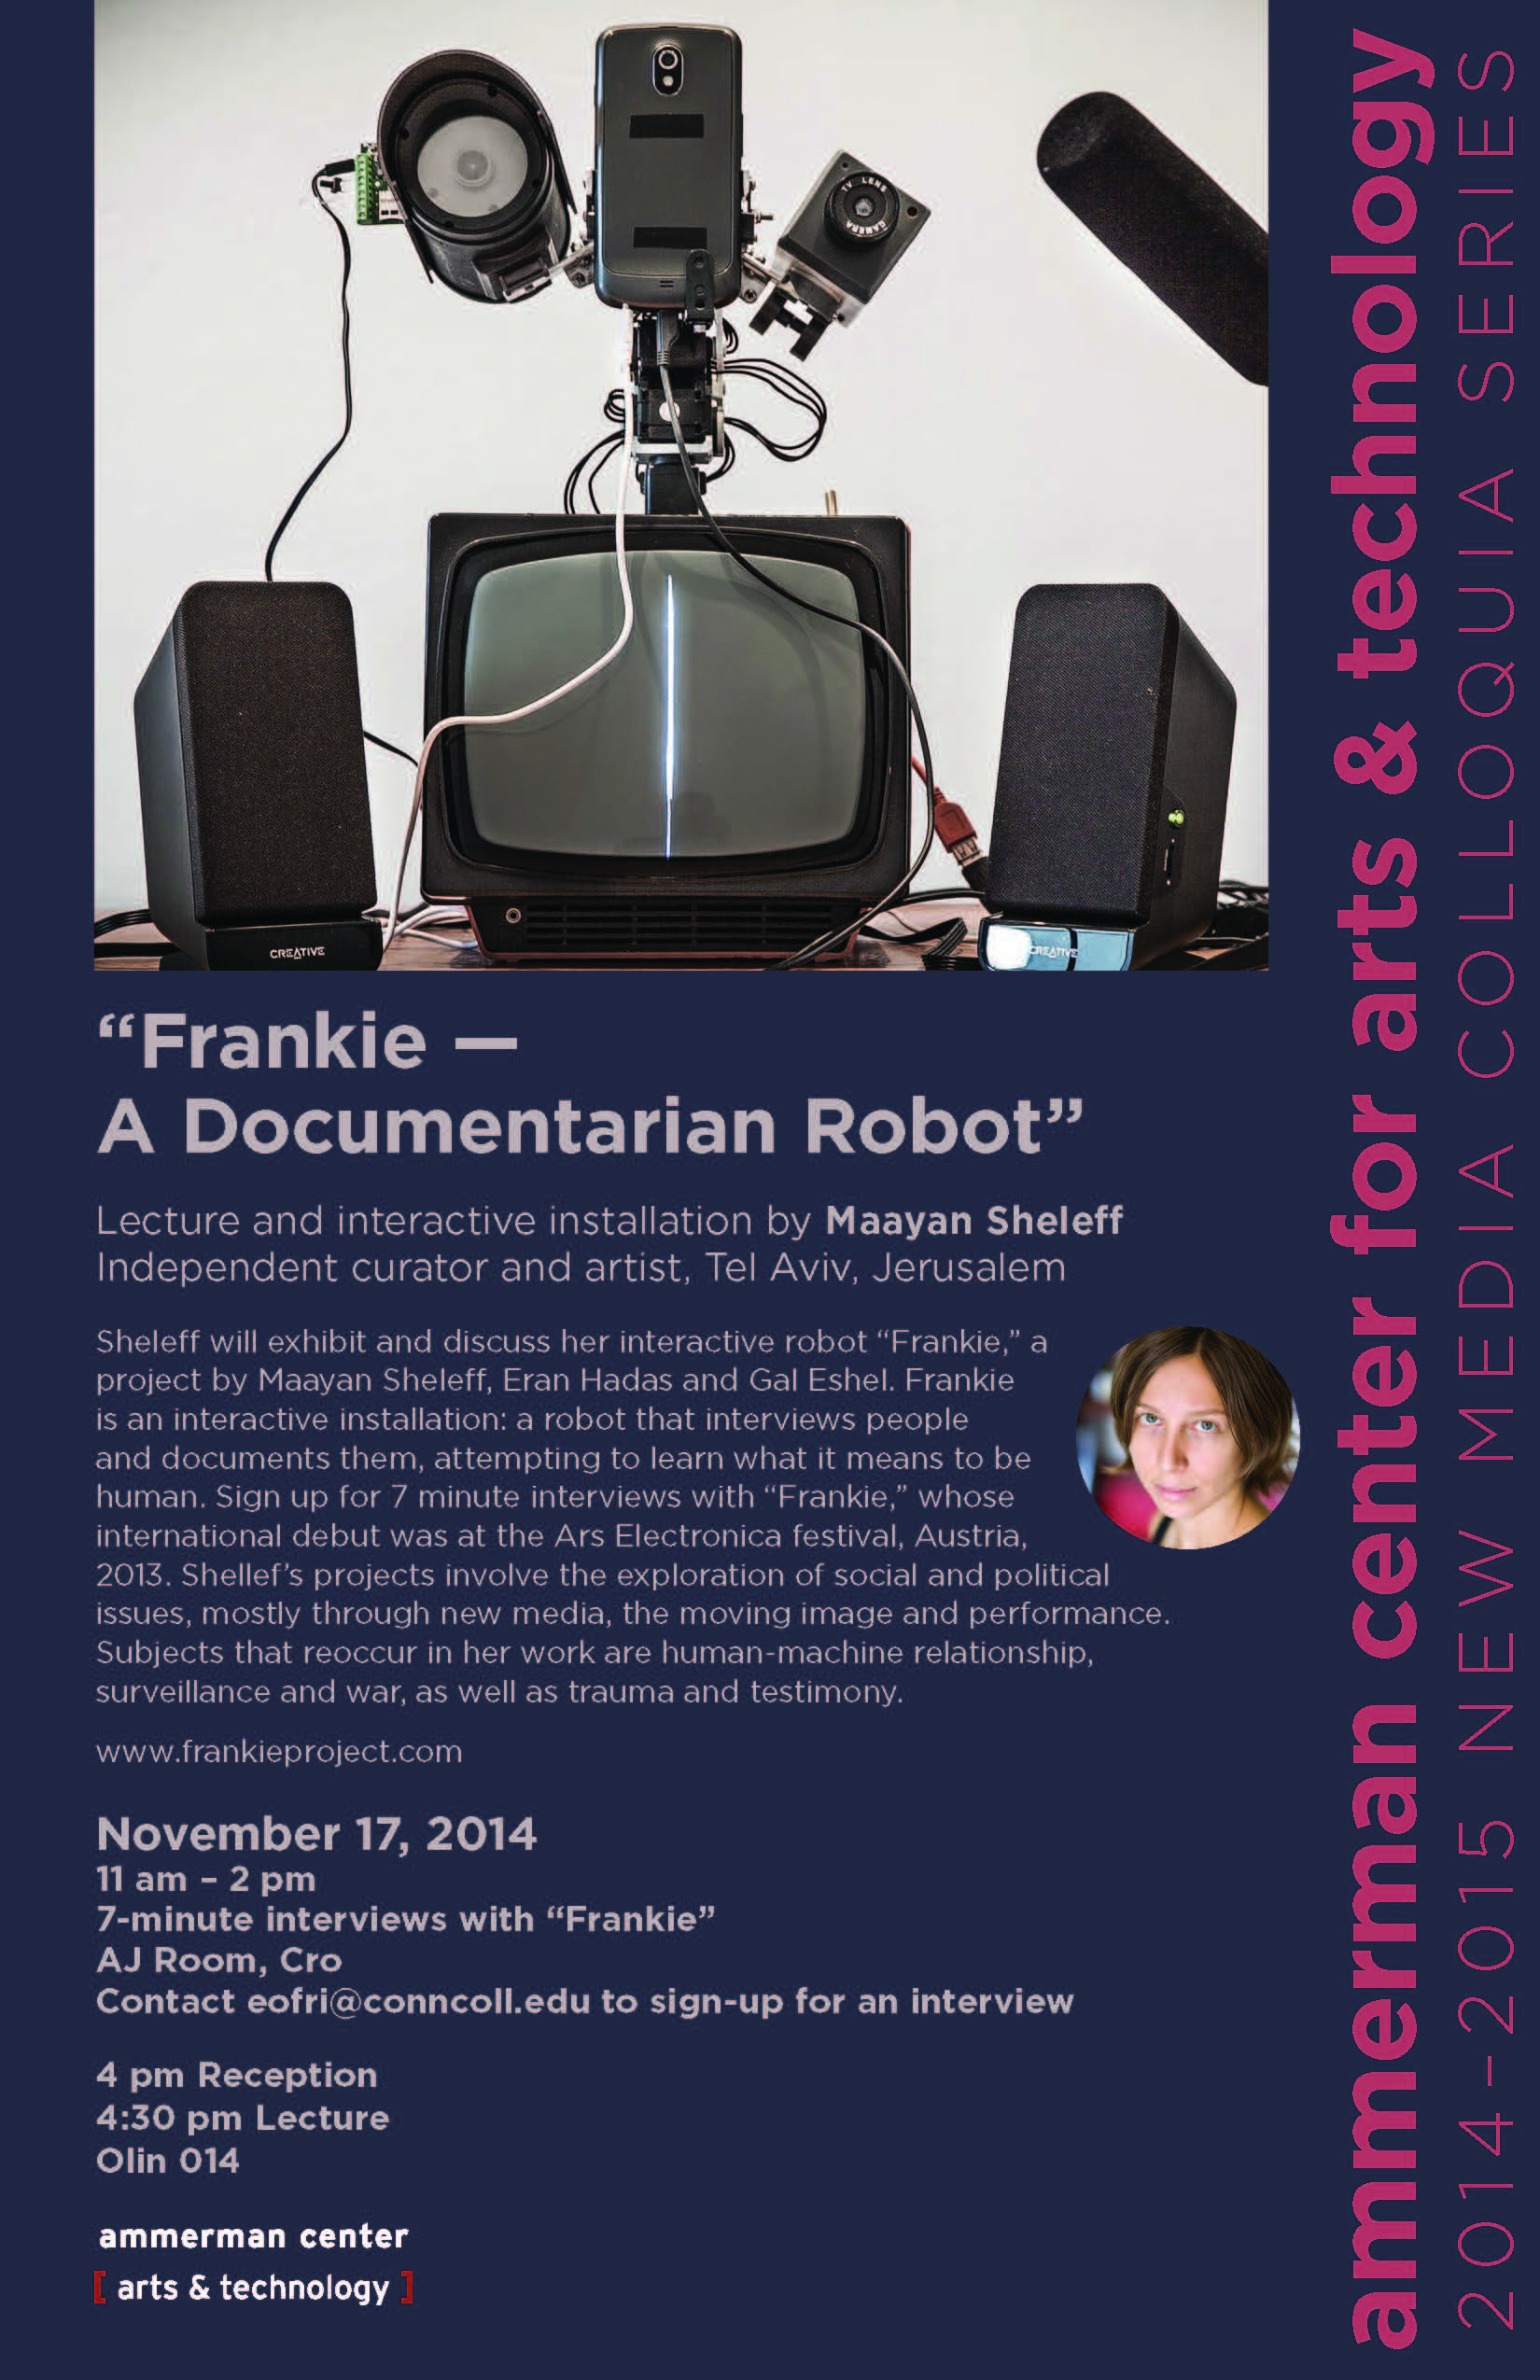 Frankie - A Documentarian Robot